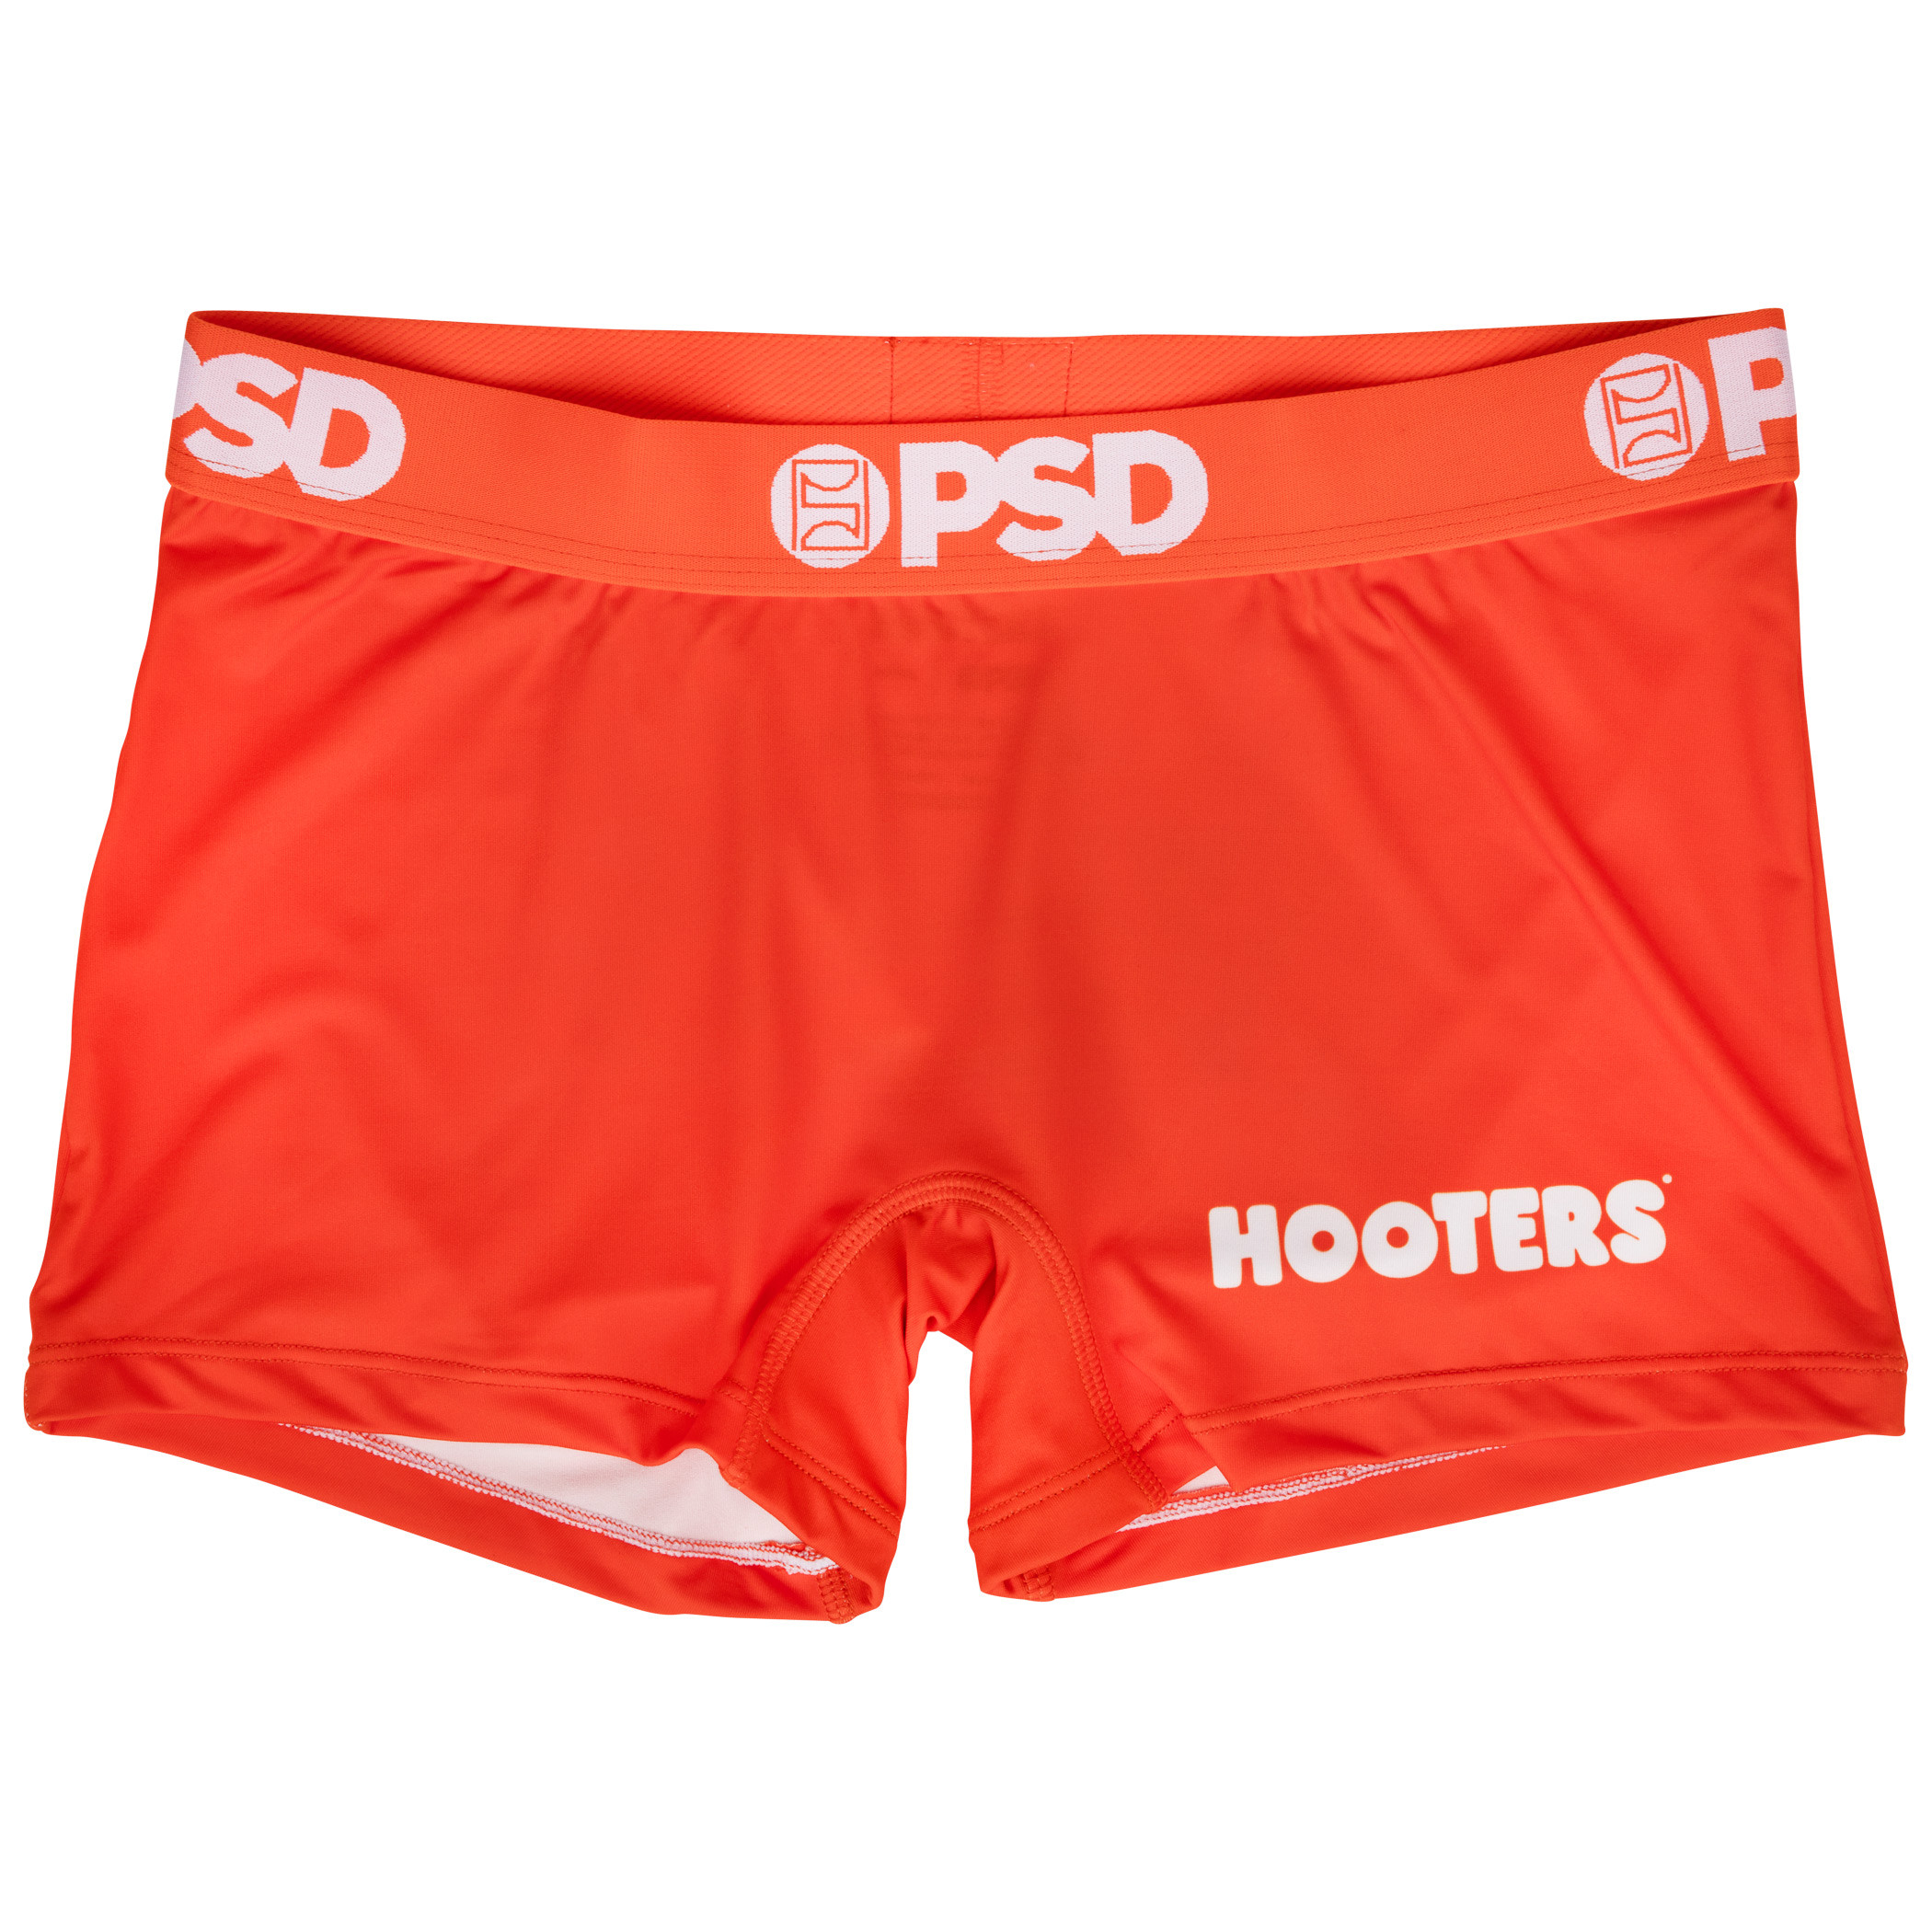 PSD Underwear Womens Hooters Uniform Boyshorts Orange